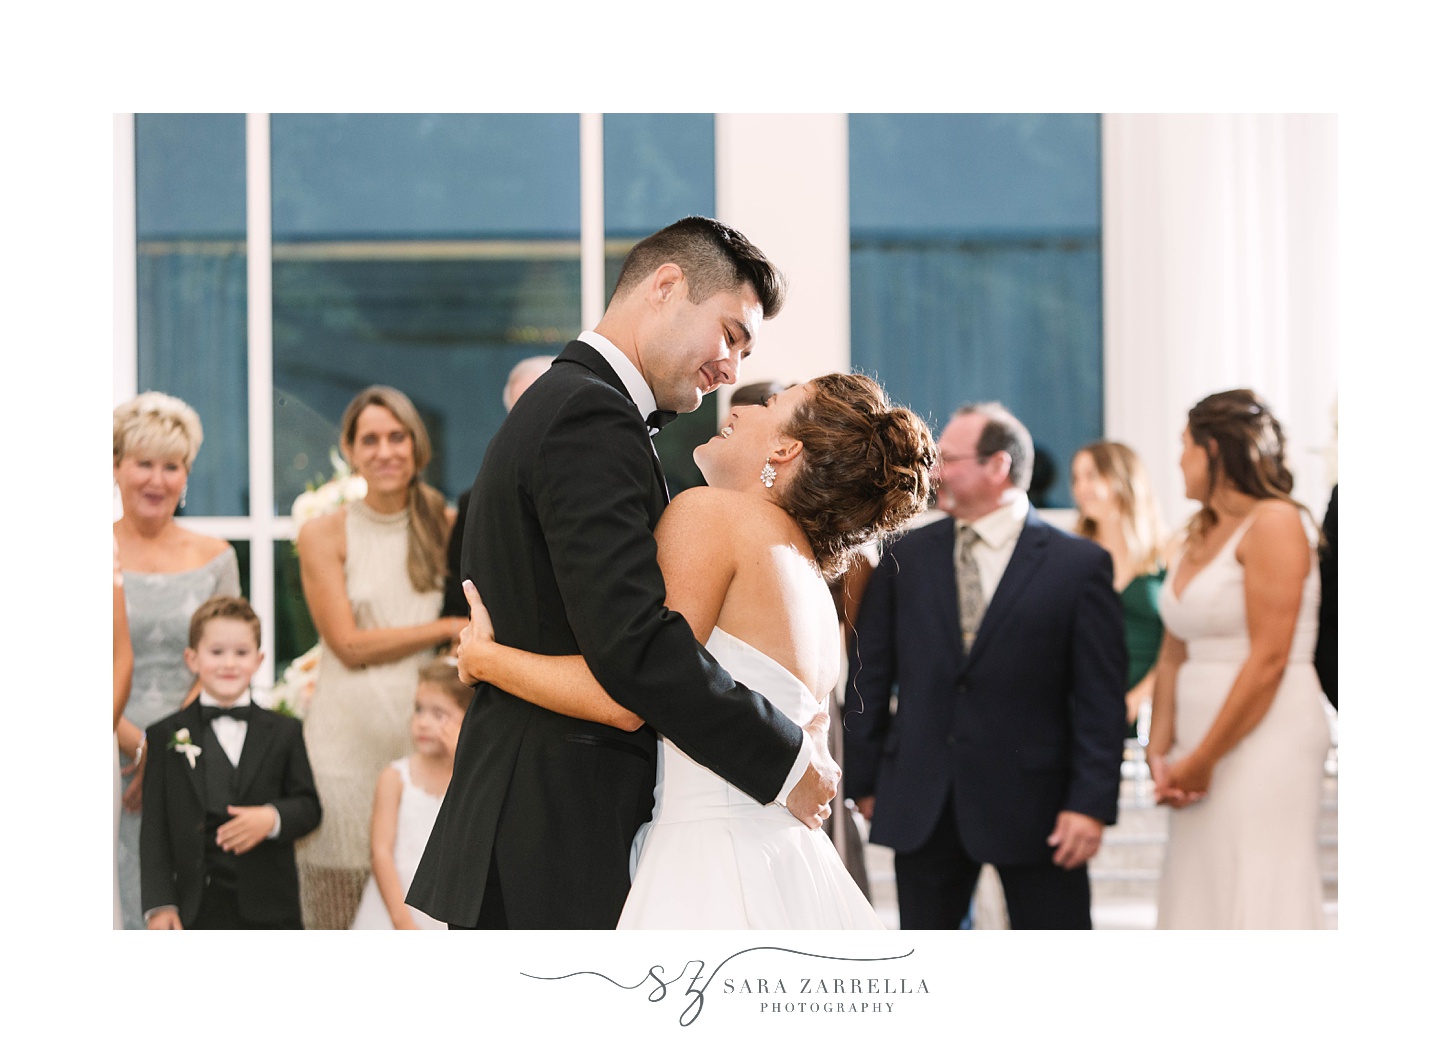 newlyweds dance together during Foxboro MA wedding reception